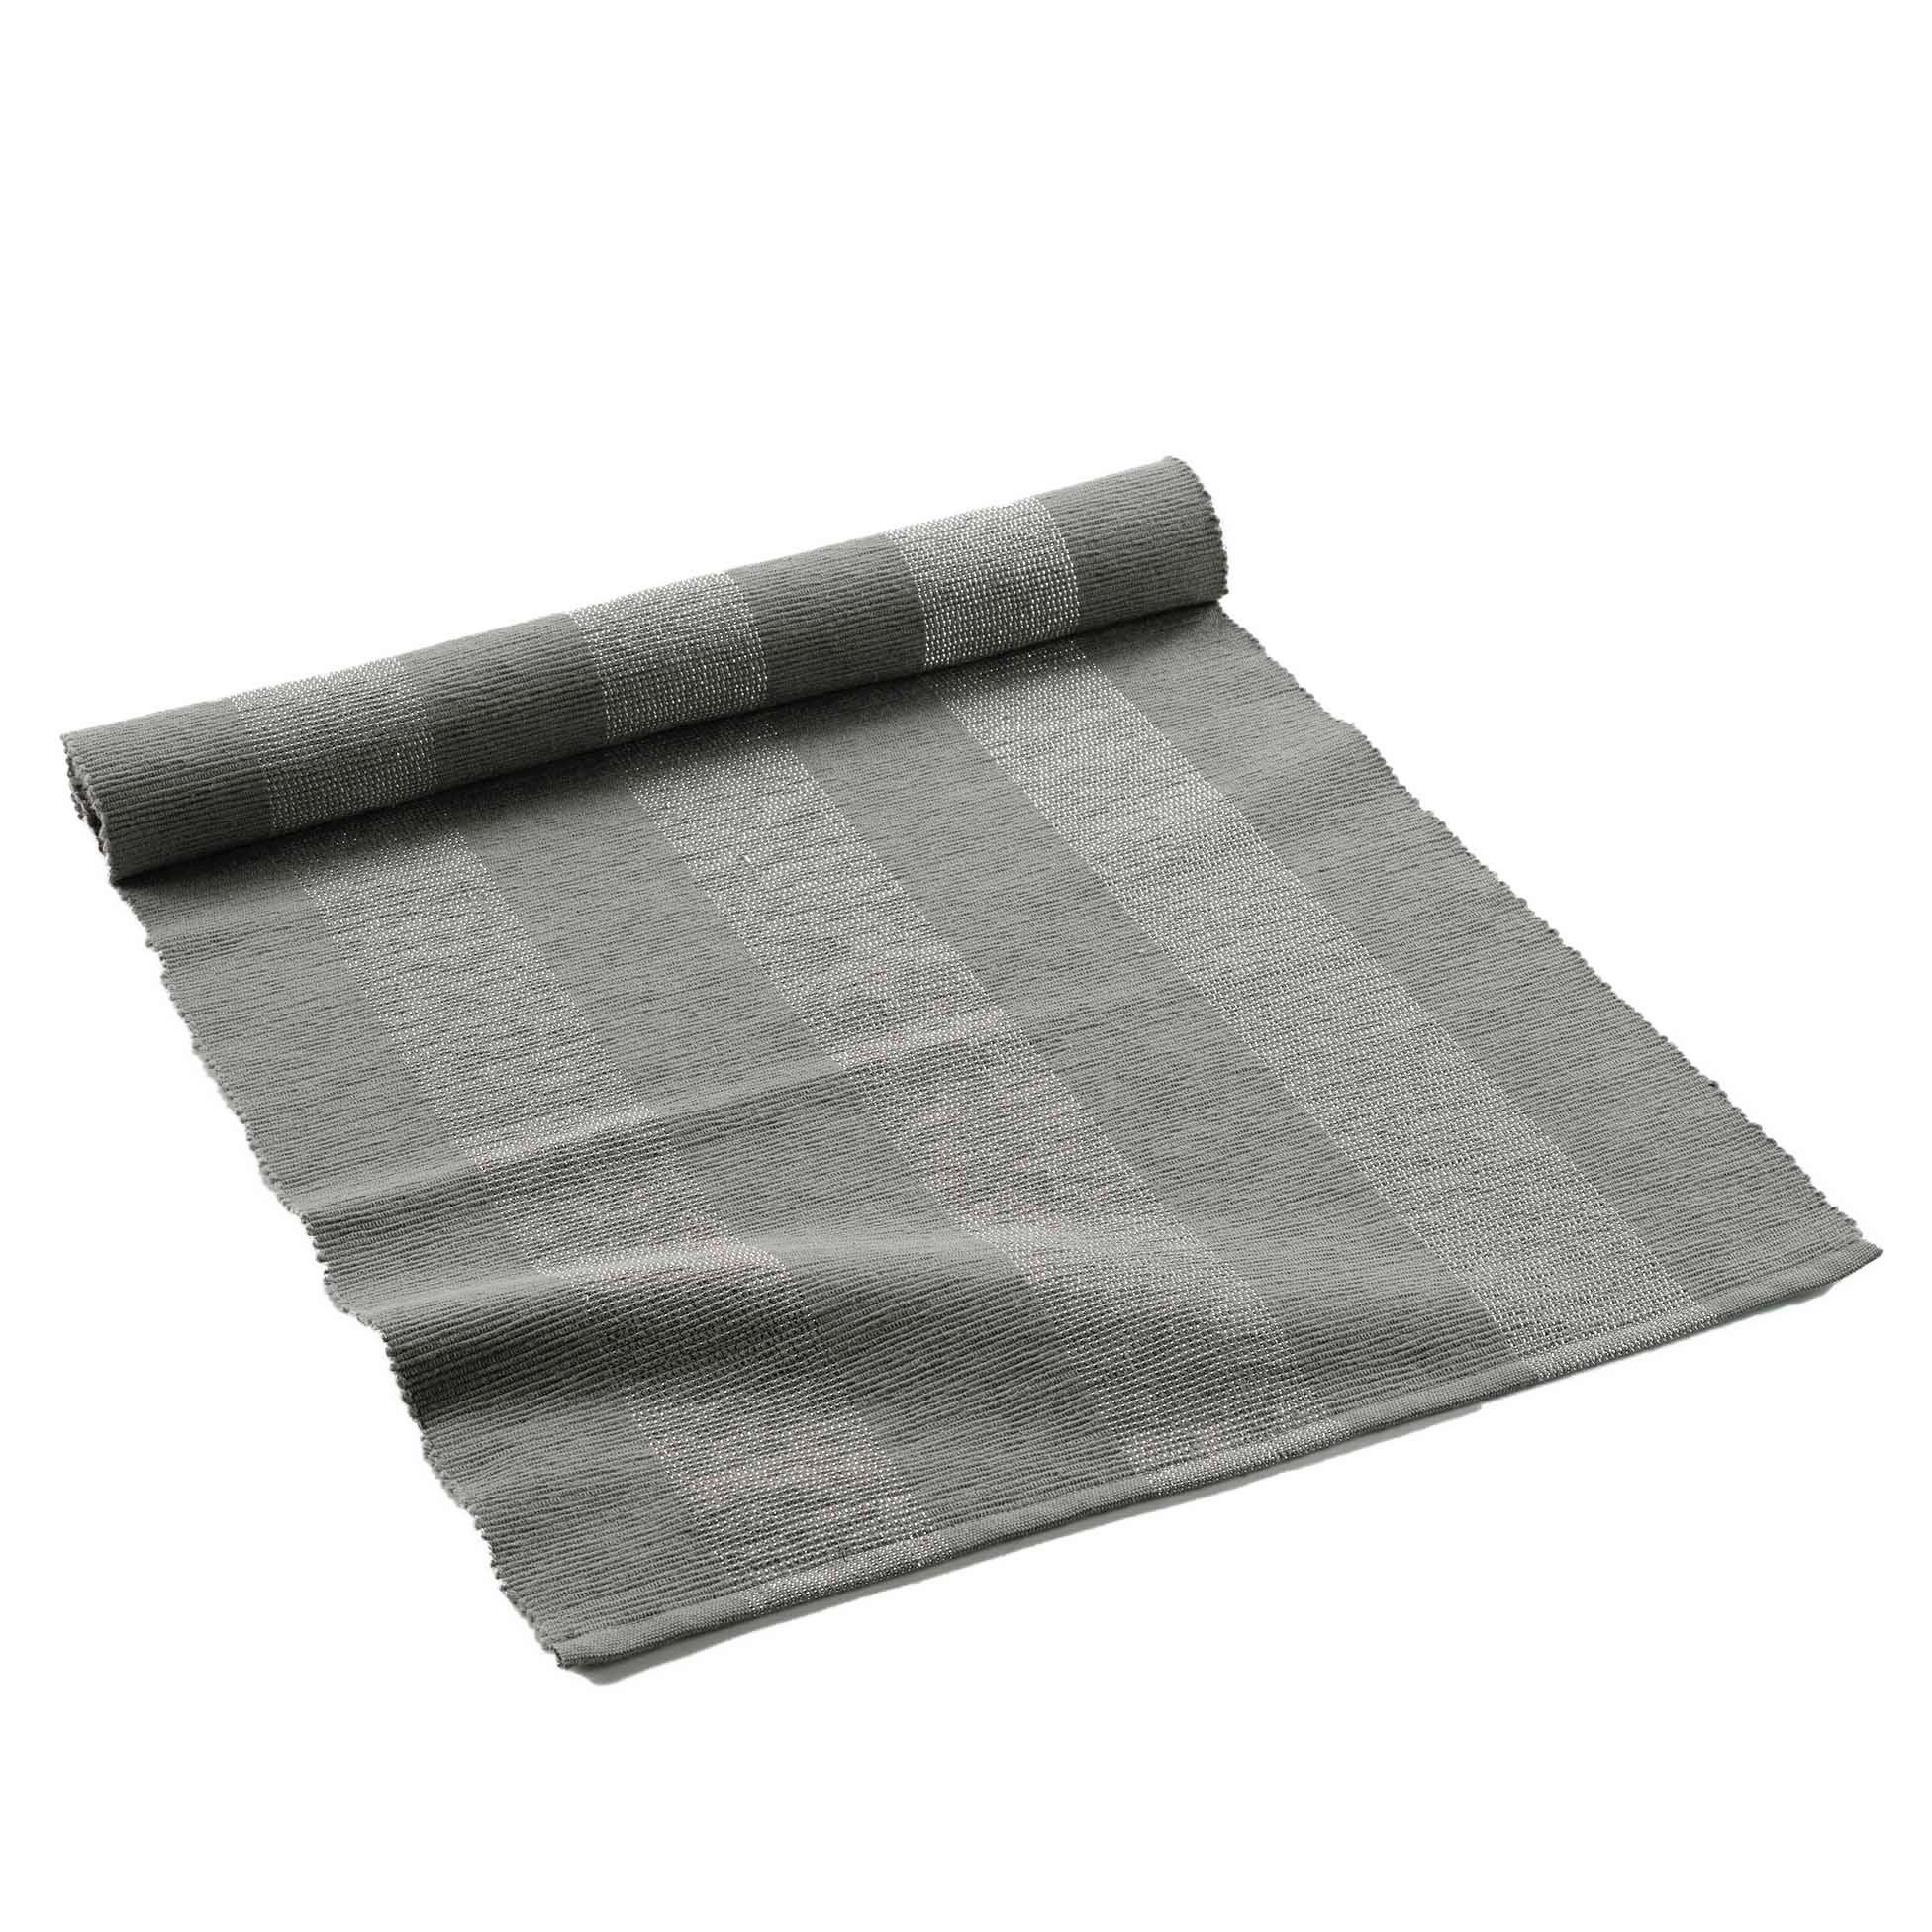 NADSTOLNJAK 40/140 cm   - tamno siva, Basics, tekstil (40/140cm)